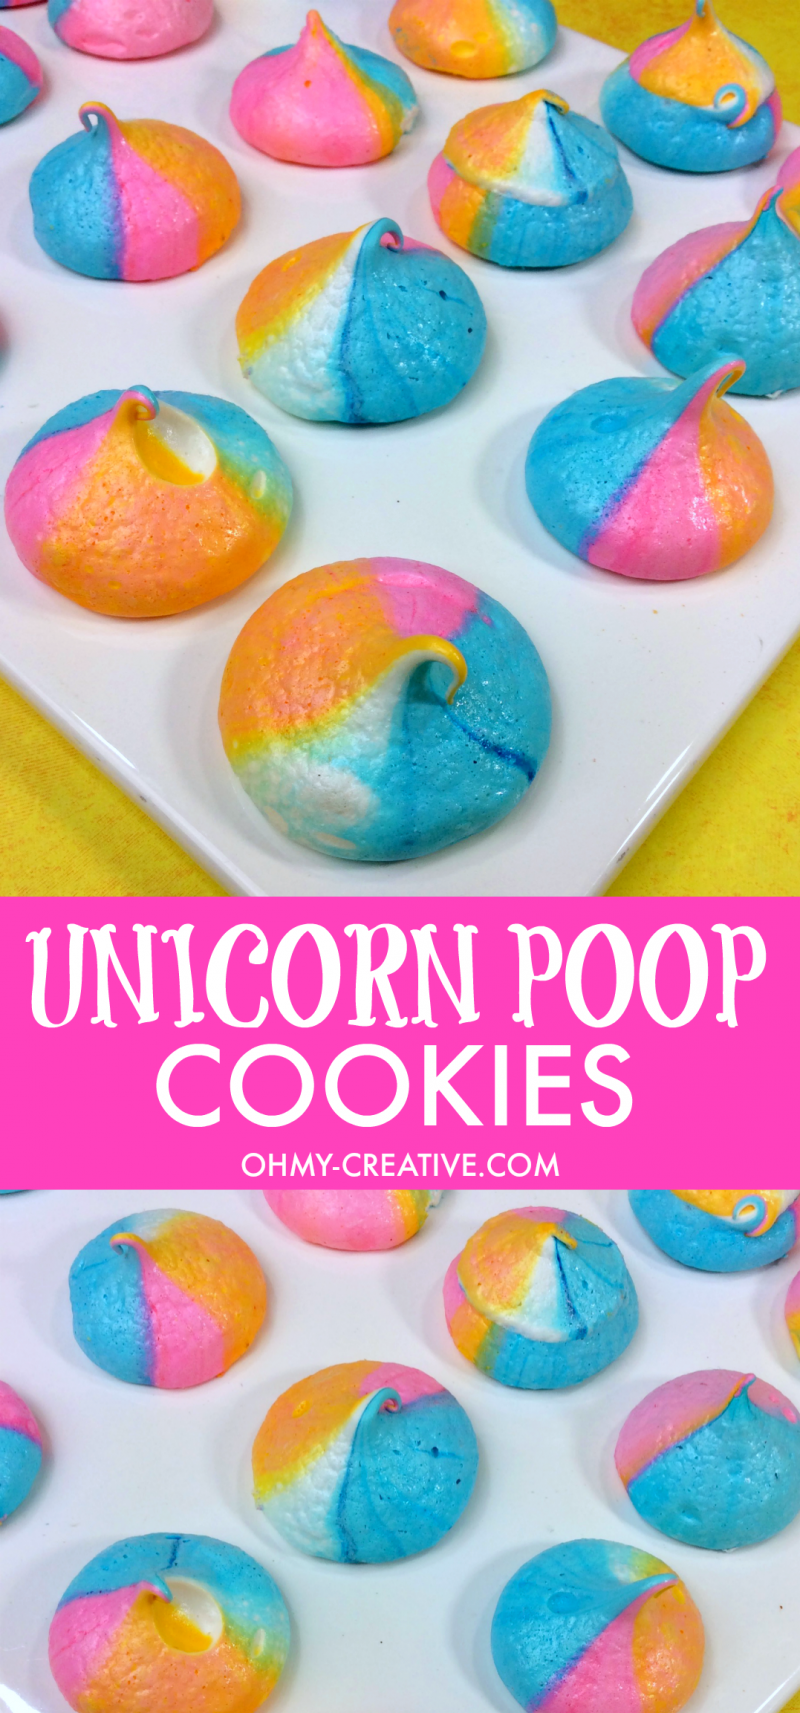 Unicorn Poop Cookie Meringue Recipe | OHMY-CREATIVE.COM | Unicorn Cookies | Unicorn Foods | Rainbow Unicorn Cookies | Poop Cookies | Unicorn Poop | Unicorn Pop | Meringue Cookies | Easy Meringue Recipe